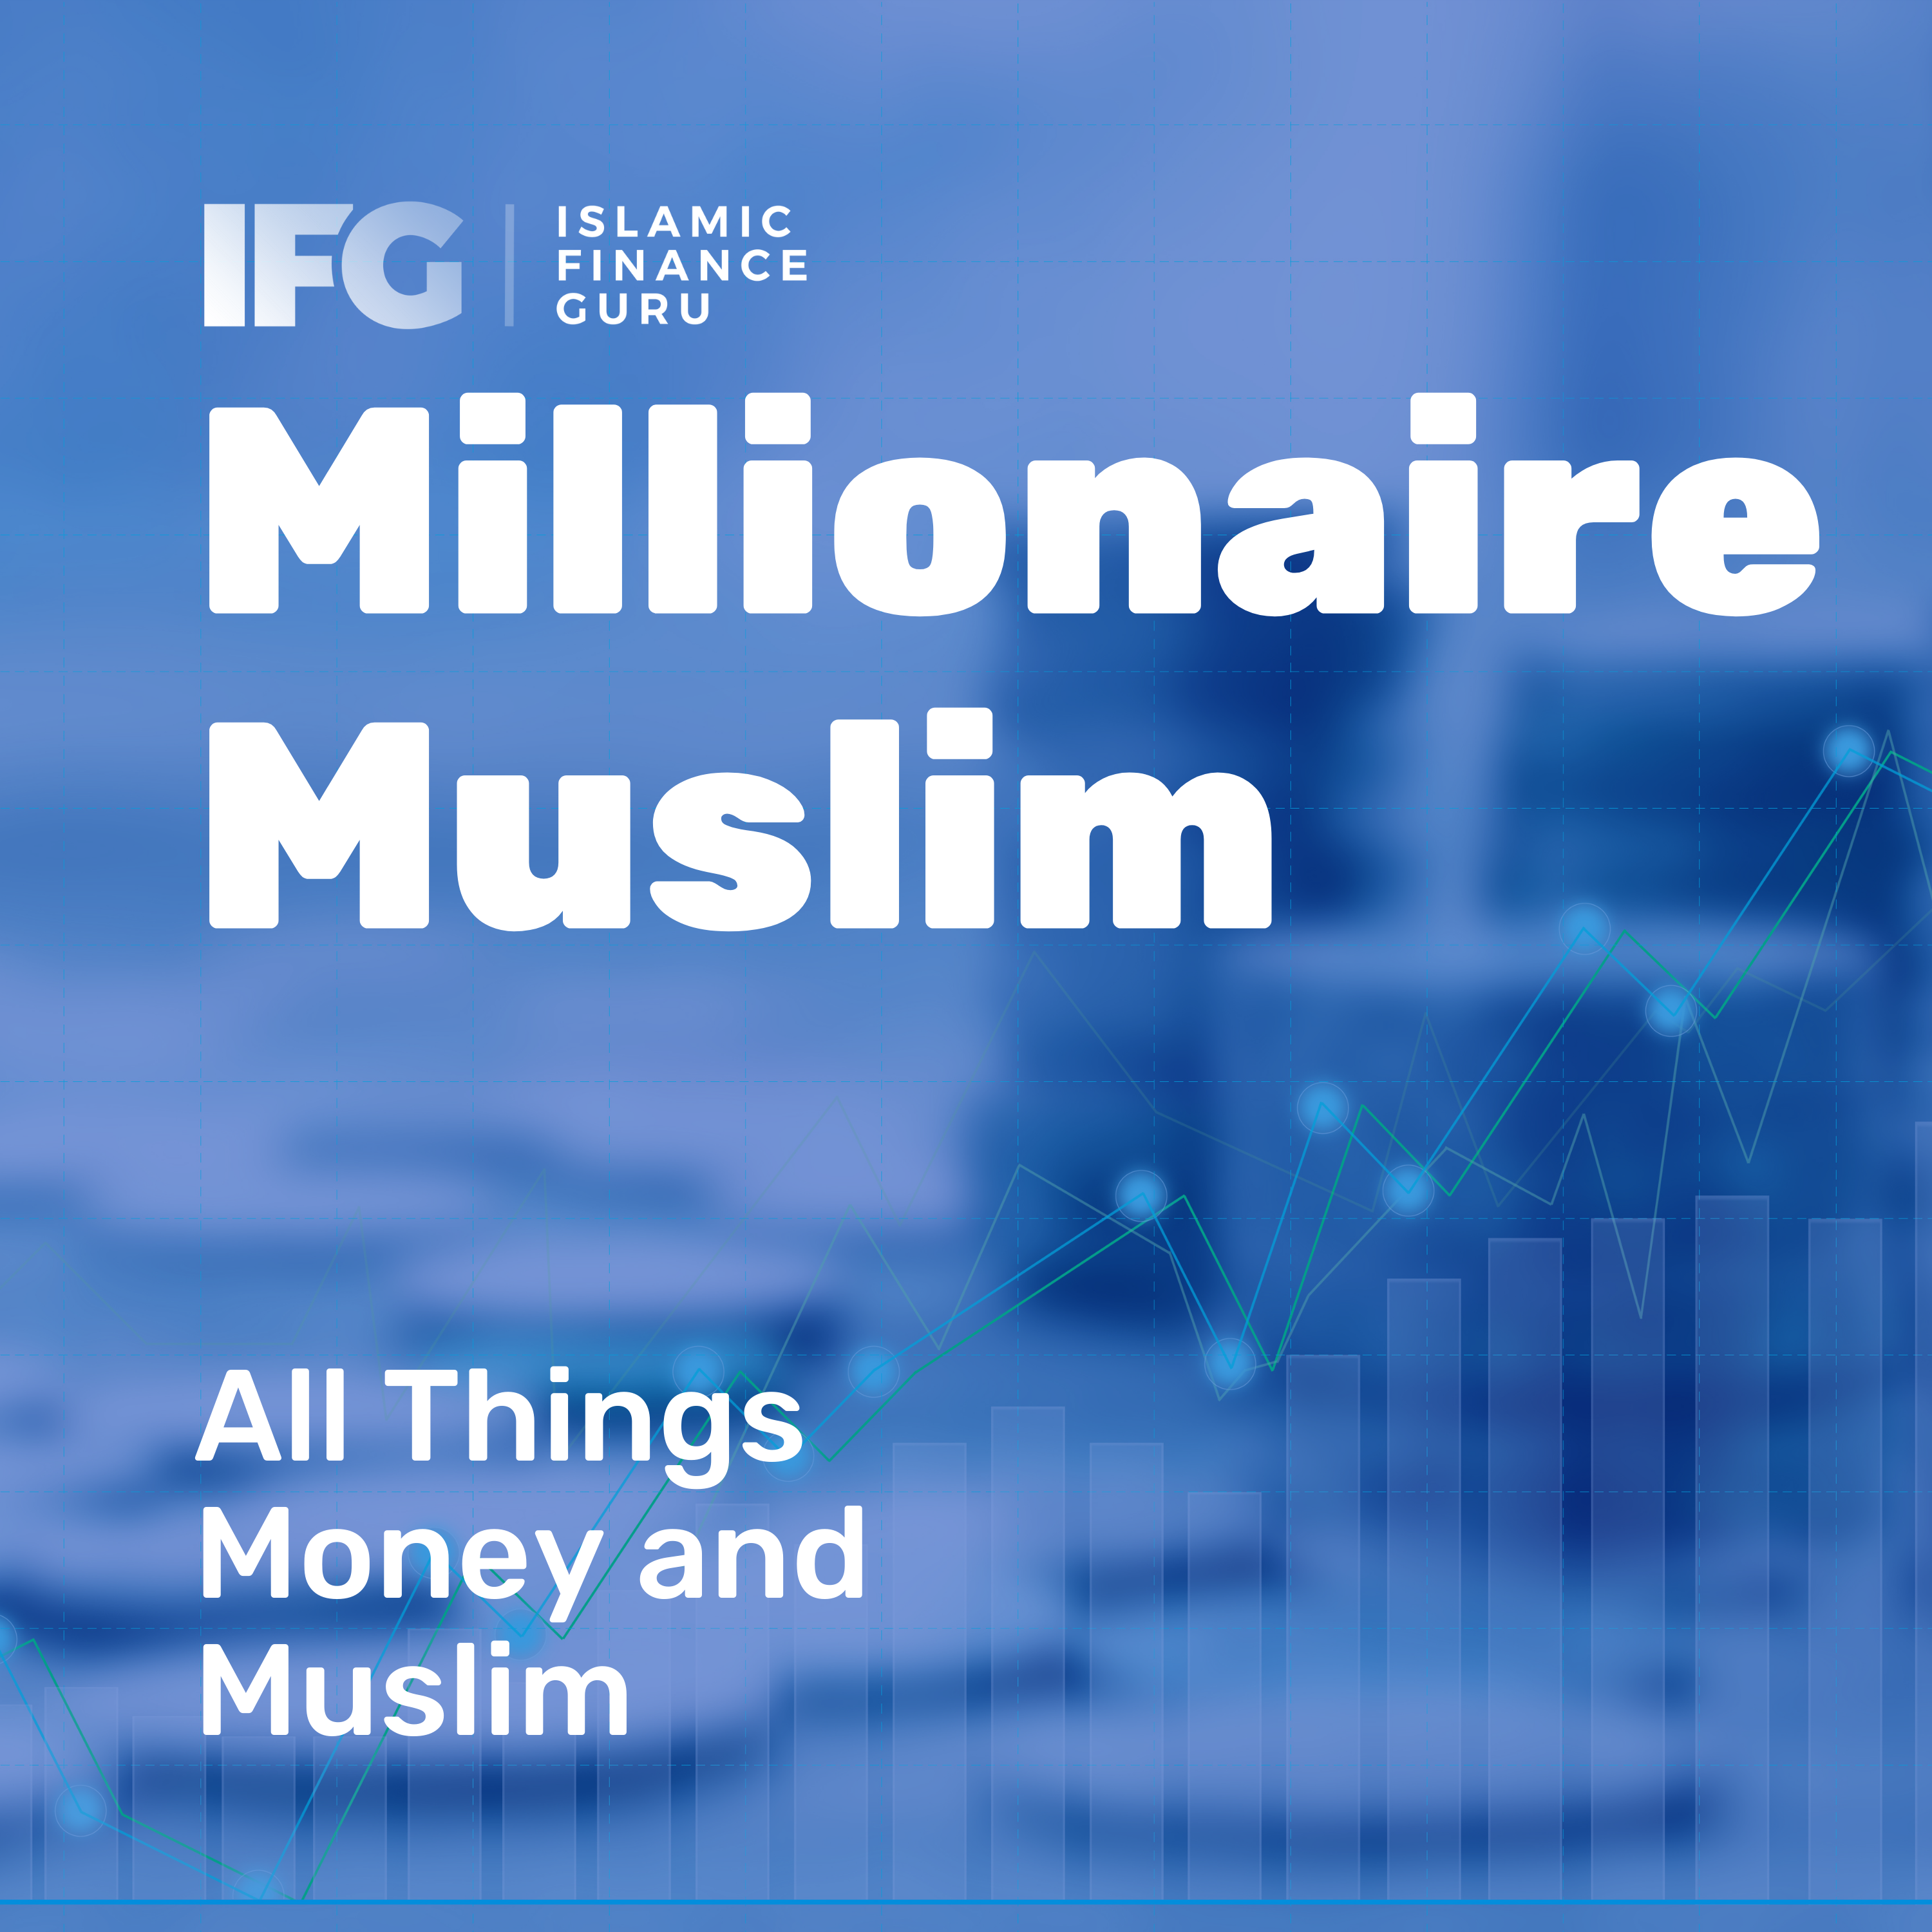 E64 Podcast: An Update from Islamic Finance Guru | IFG Featured Image